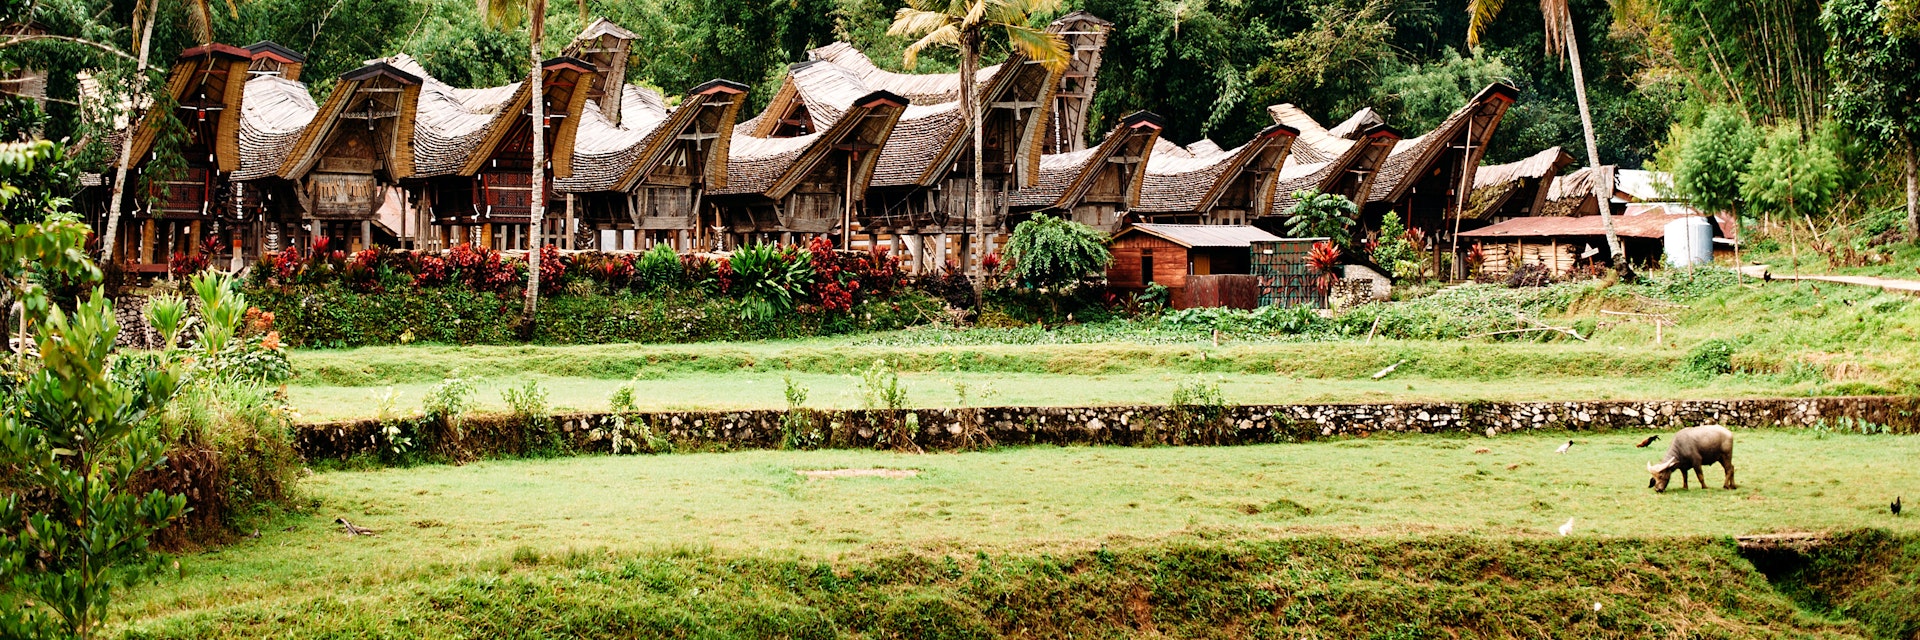 Traditional Tana Toraja village with buffalo in the foreground , tongkonan houses and buildings. Kete Kesu, Rantepao, Sulawesi, Indonesia